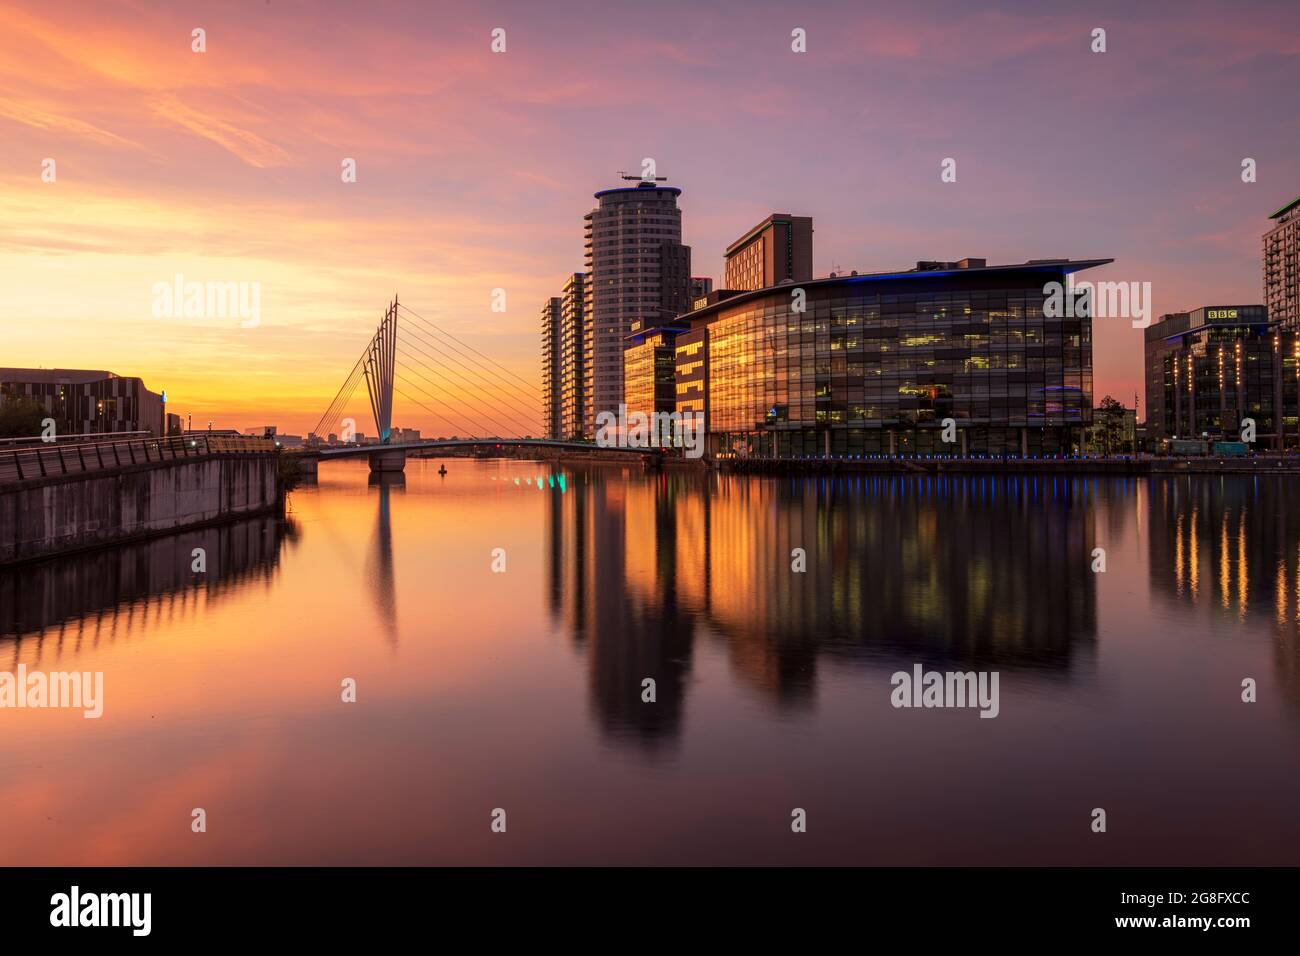 MediaCity UK reflected at night, Salford Quays, Manchester, England, United Kingdom, Europe Stock Photo